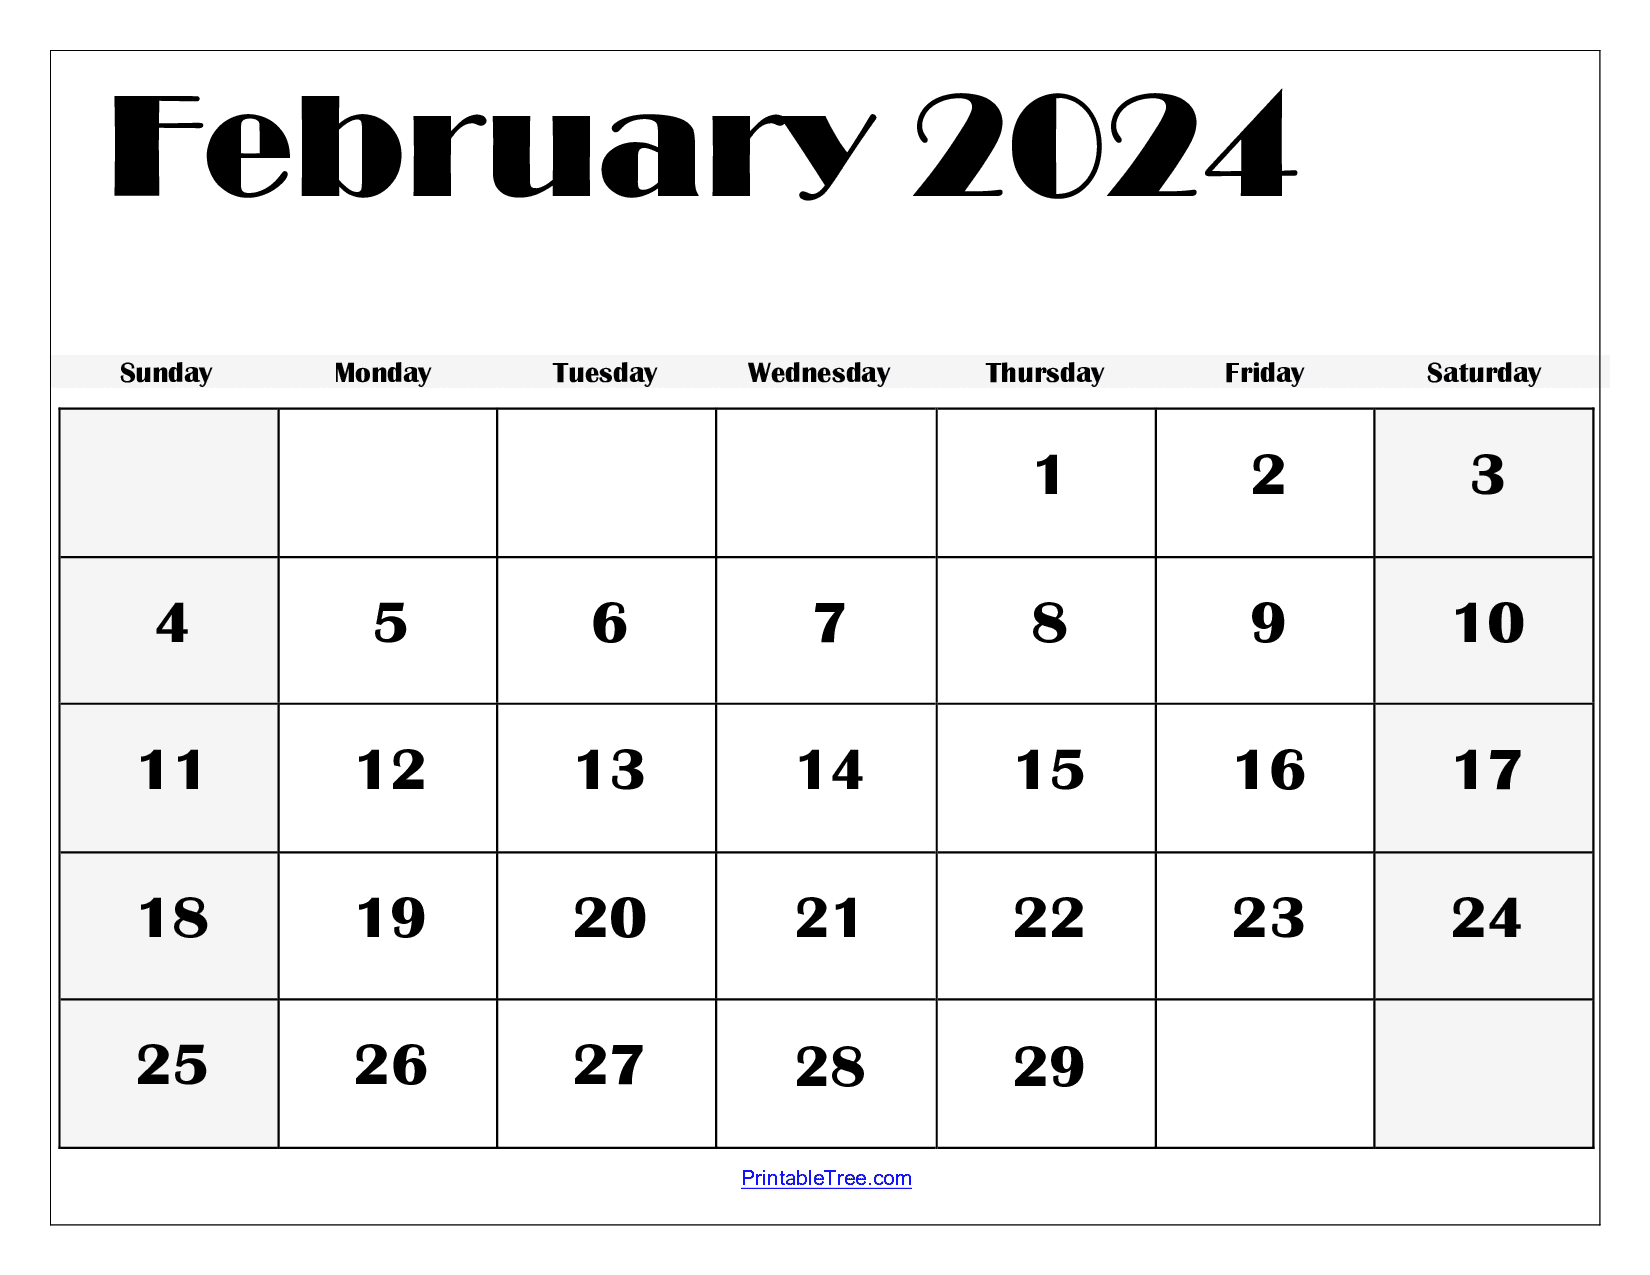 February 2024 Calendar Printable Pdf Template With Holidays for Calendar For February 2024 Printable